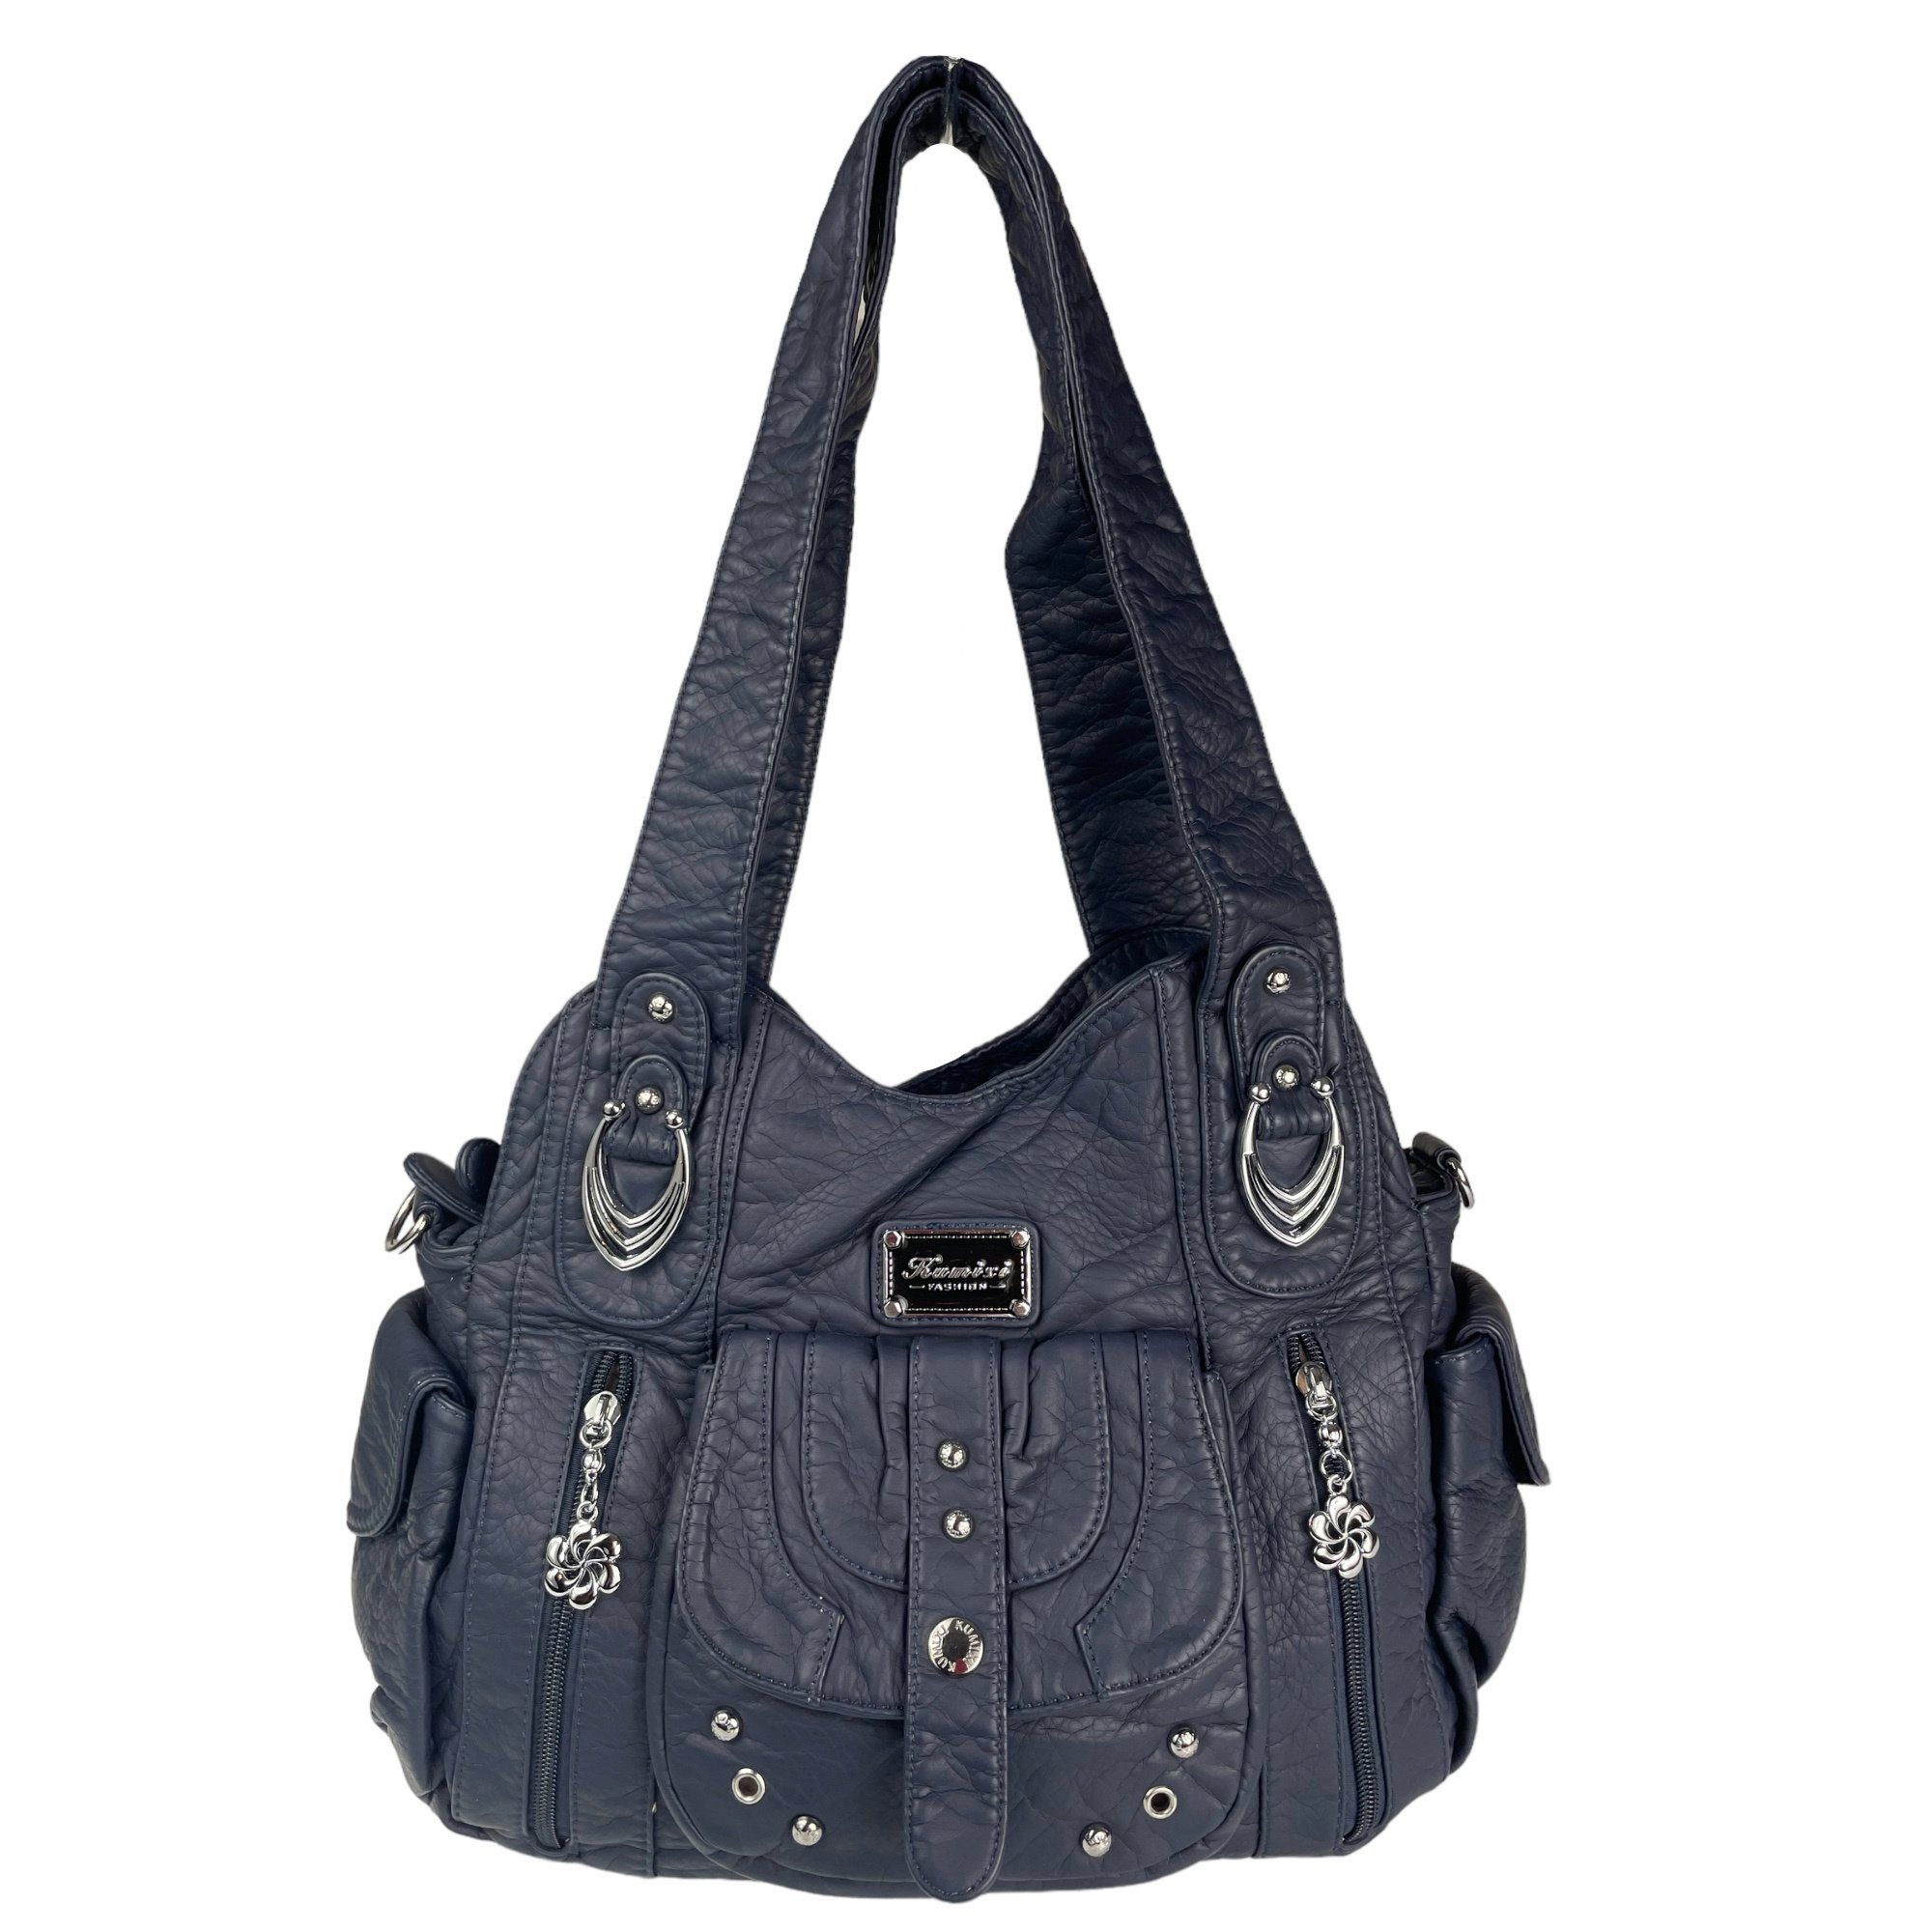 Taschen4life Schultertasche Damen Handtasche AKW22026, lange Tragegriffe & abnehmbarer Schulterriemen, Schultertasche dunkelblau | Schultertaschen